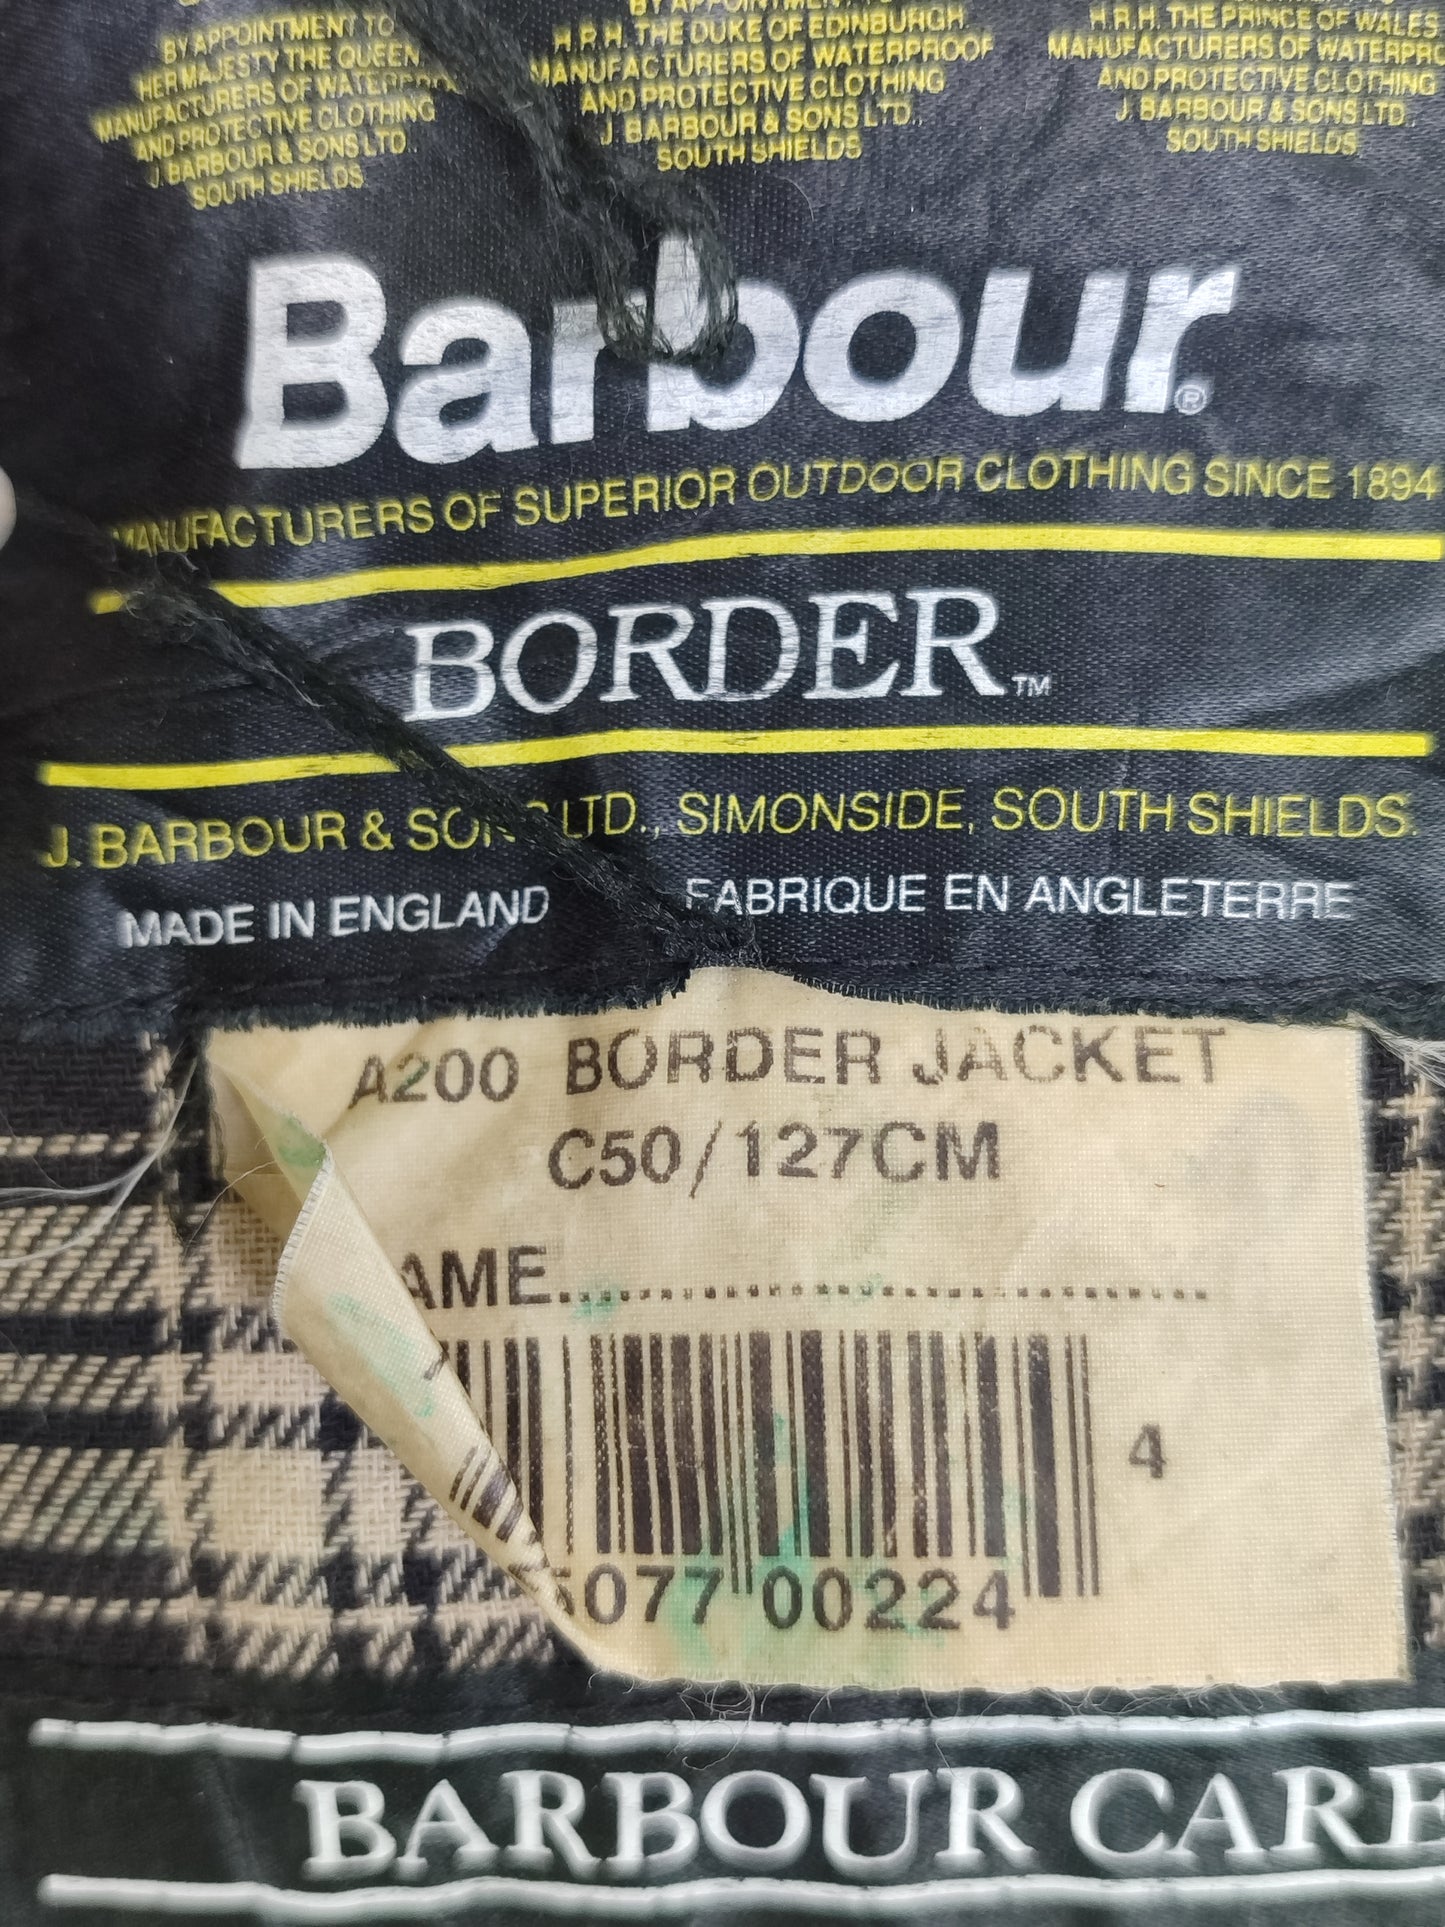 Giacca Barbour Vintage Border Verde da Uomo C50/127cm  Man Green wax Coat size XXL